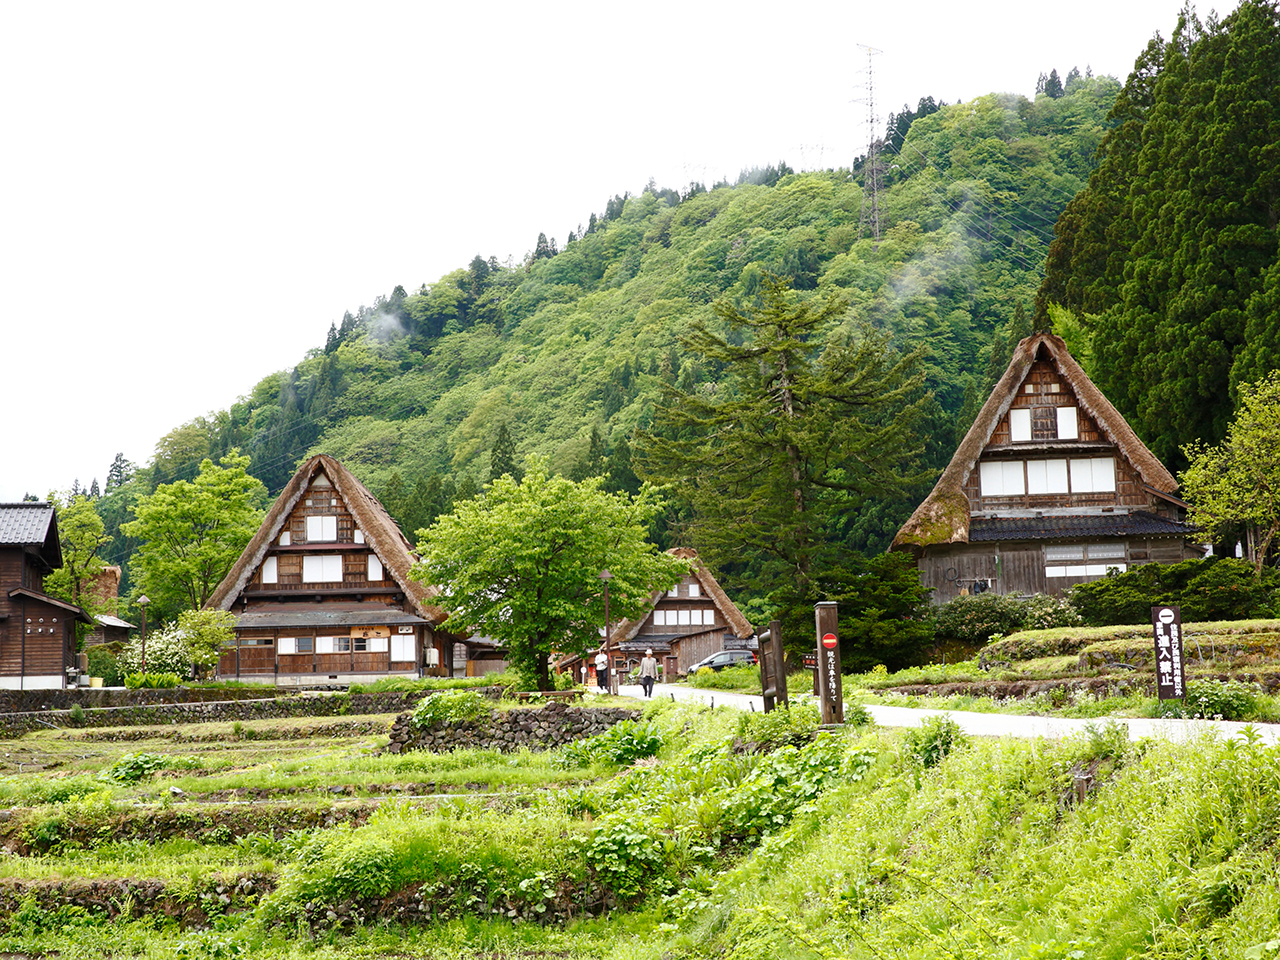 World heritage Gokayama Gassho-Zukuri village lodging experience